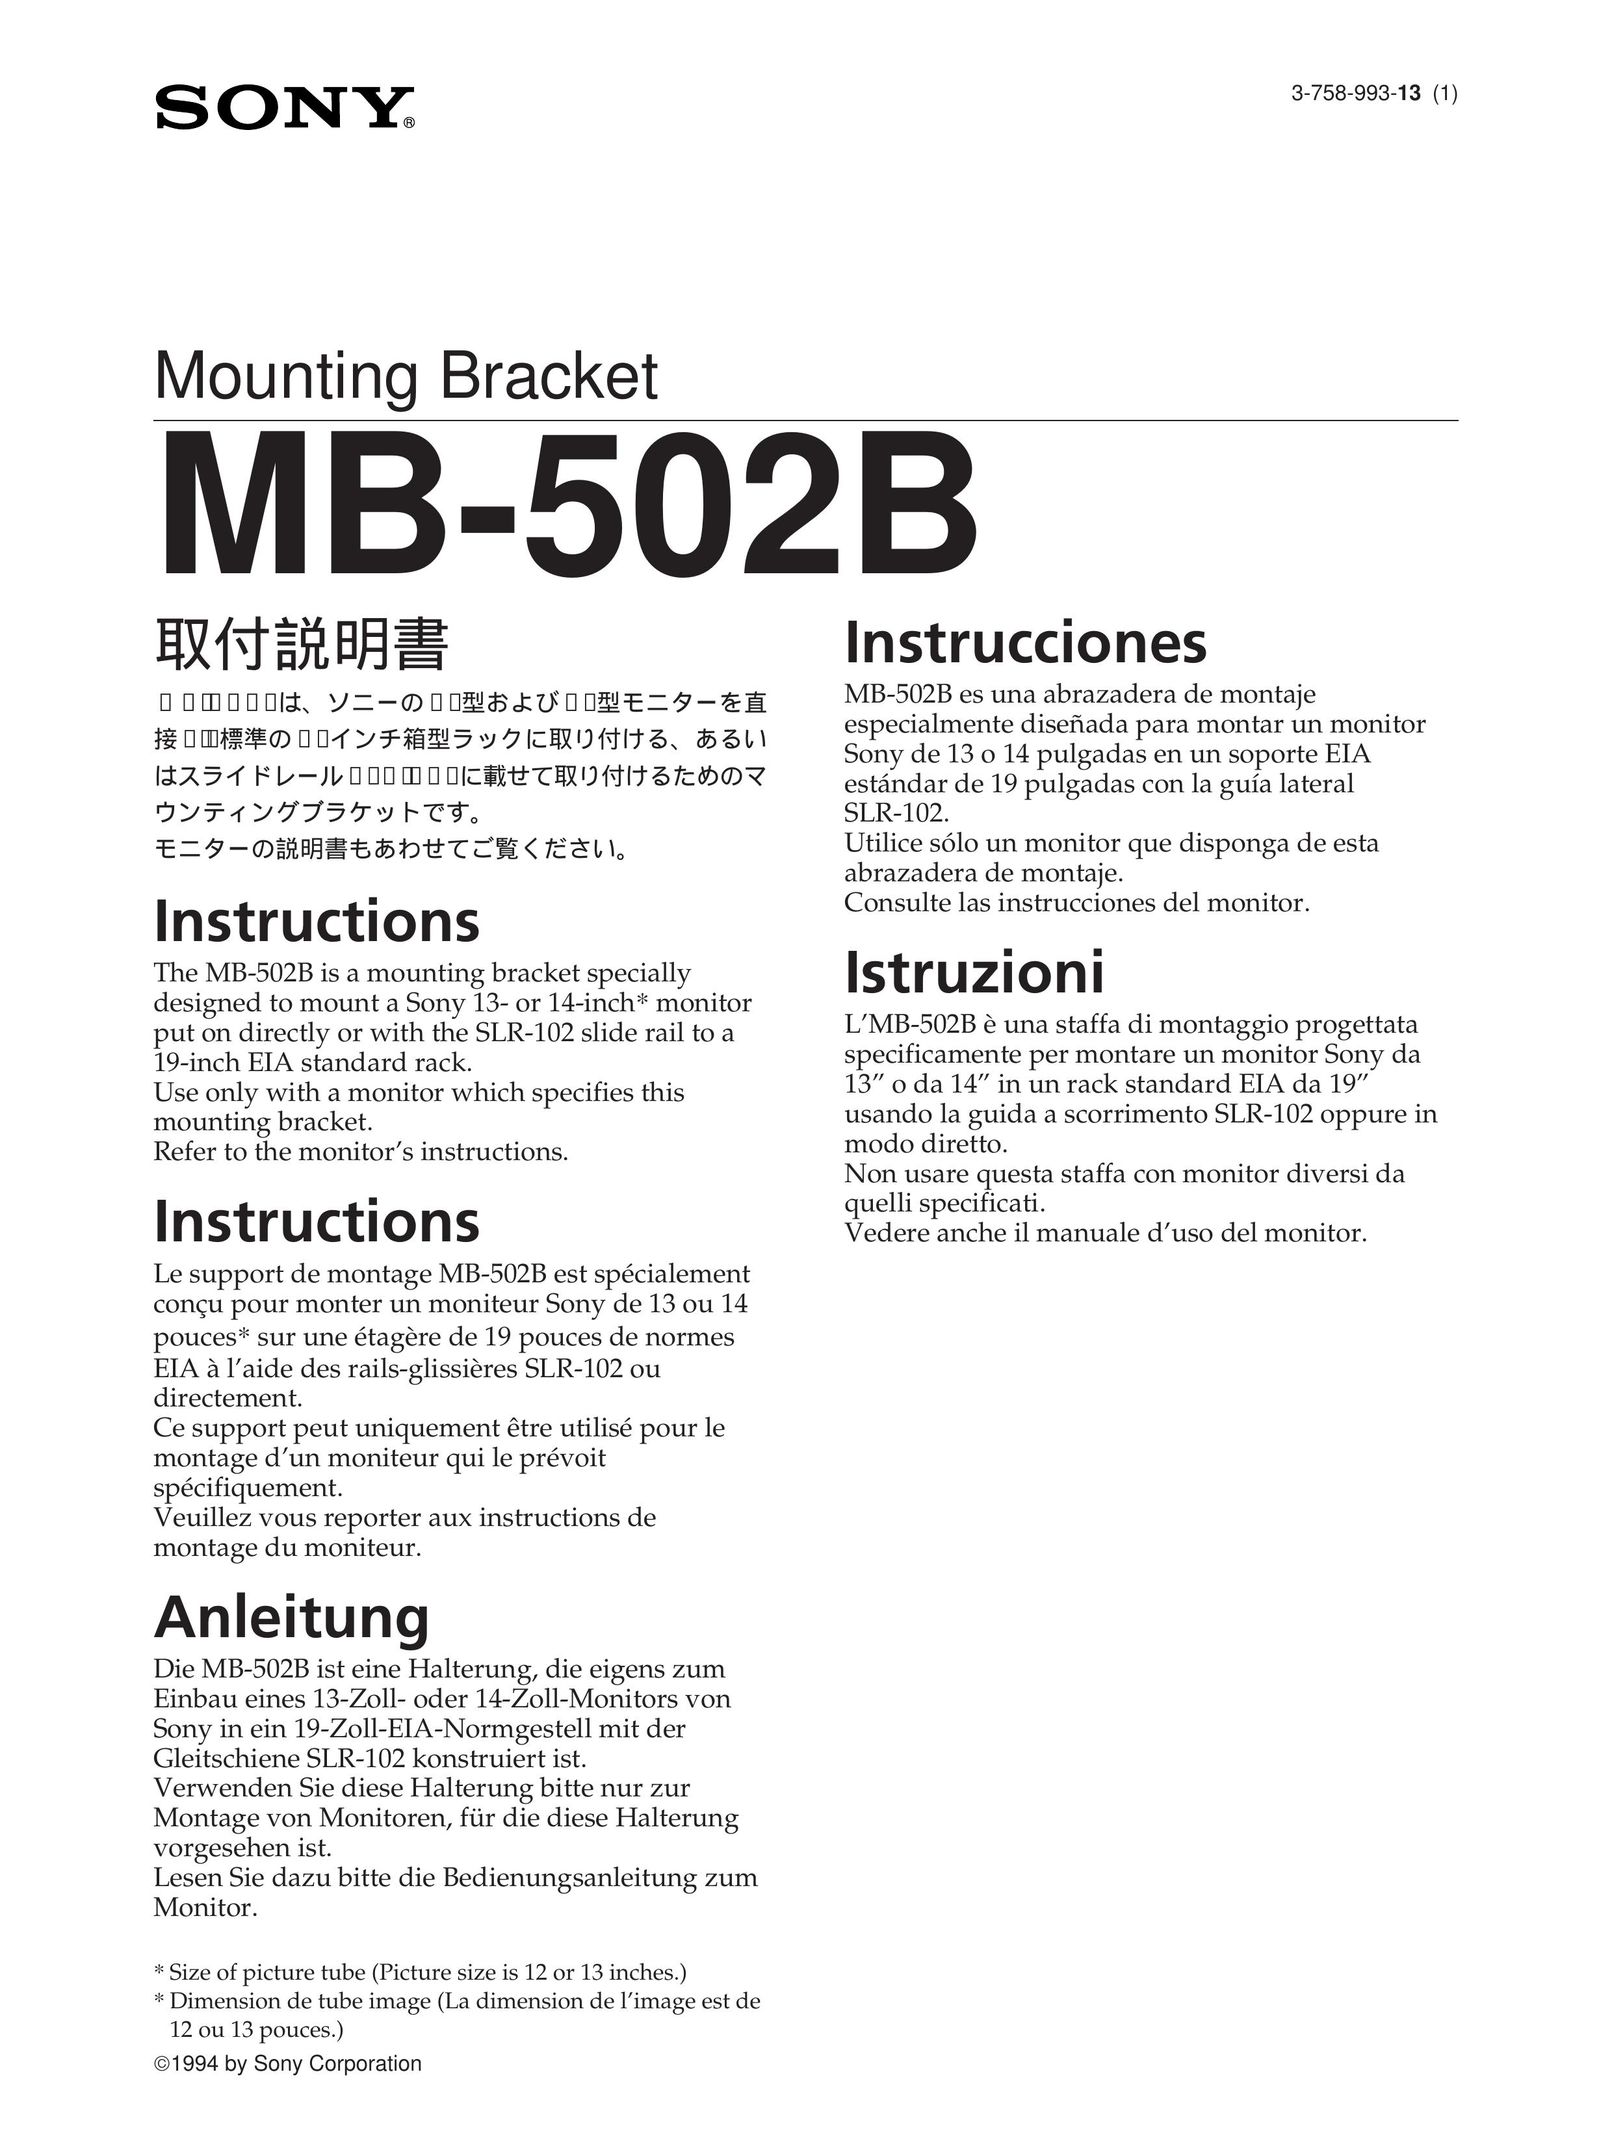 Sony MB-502B TV Mount User Manual